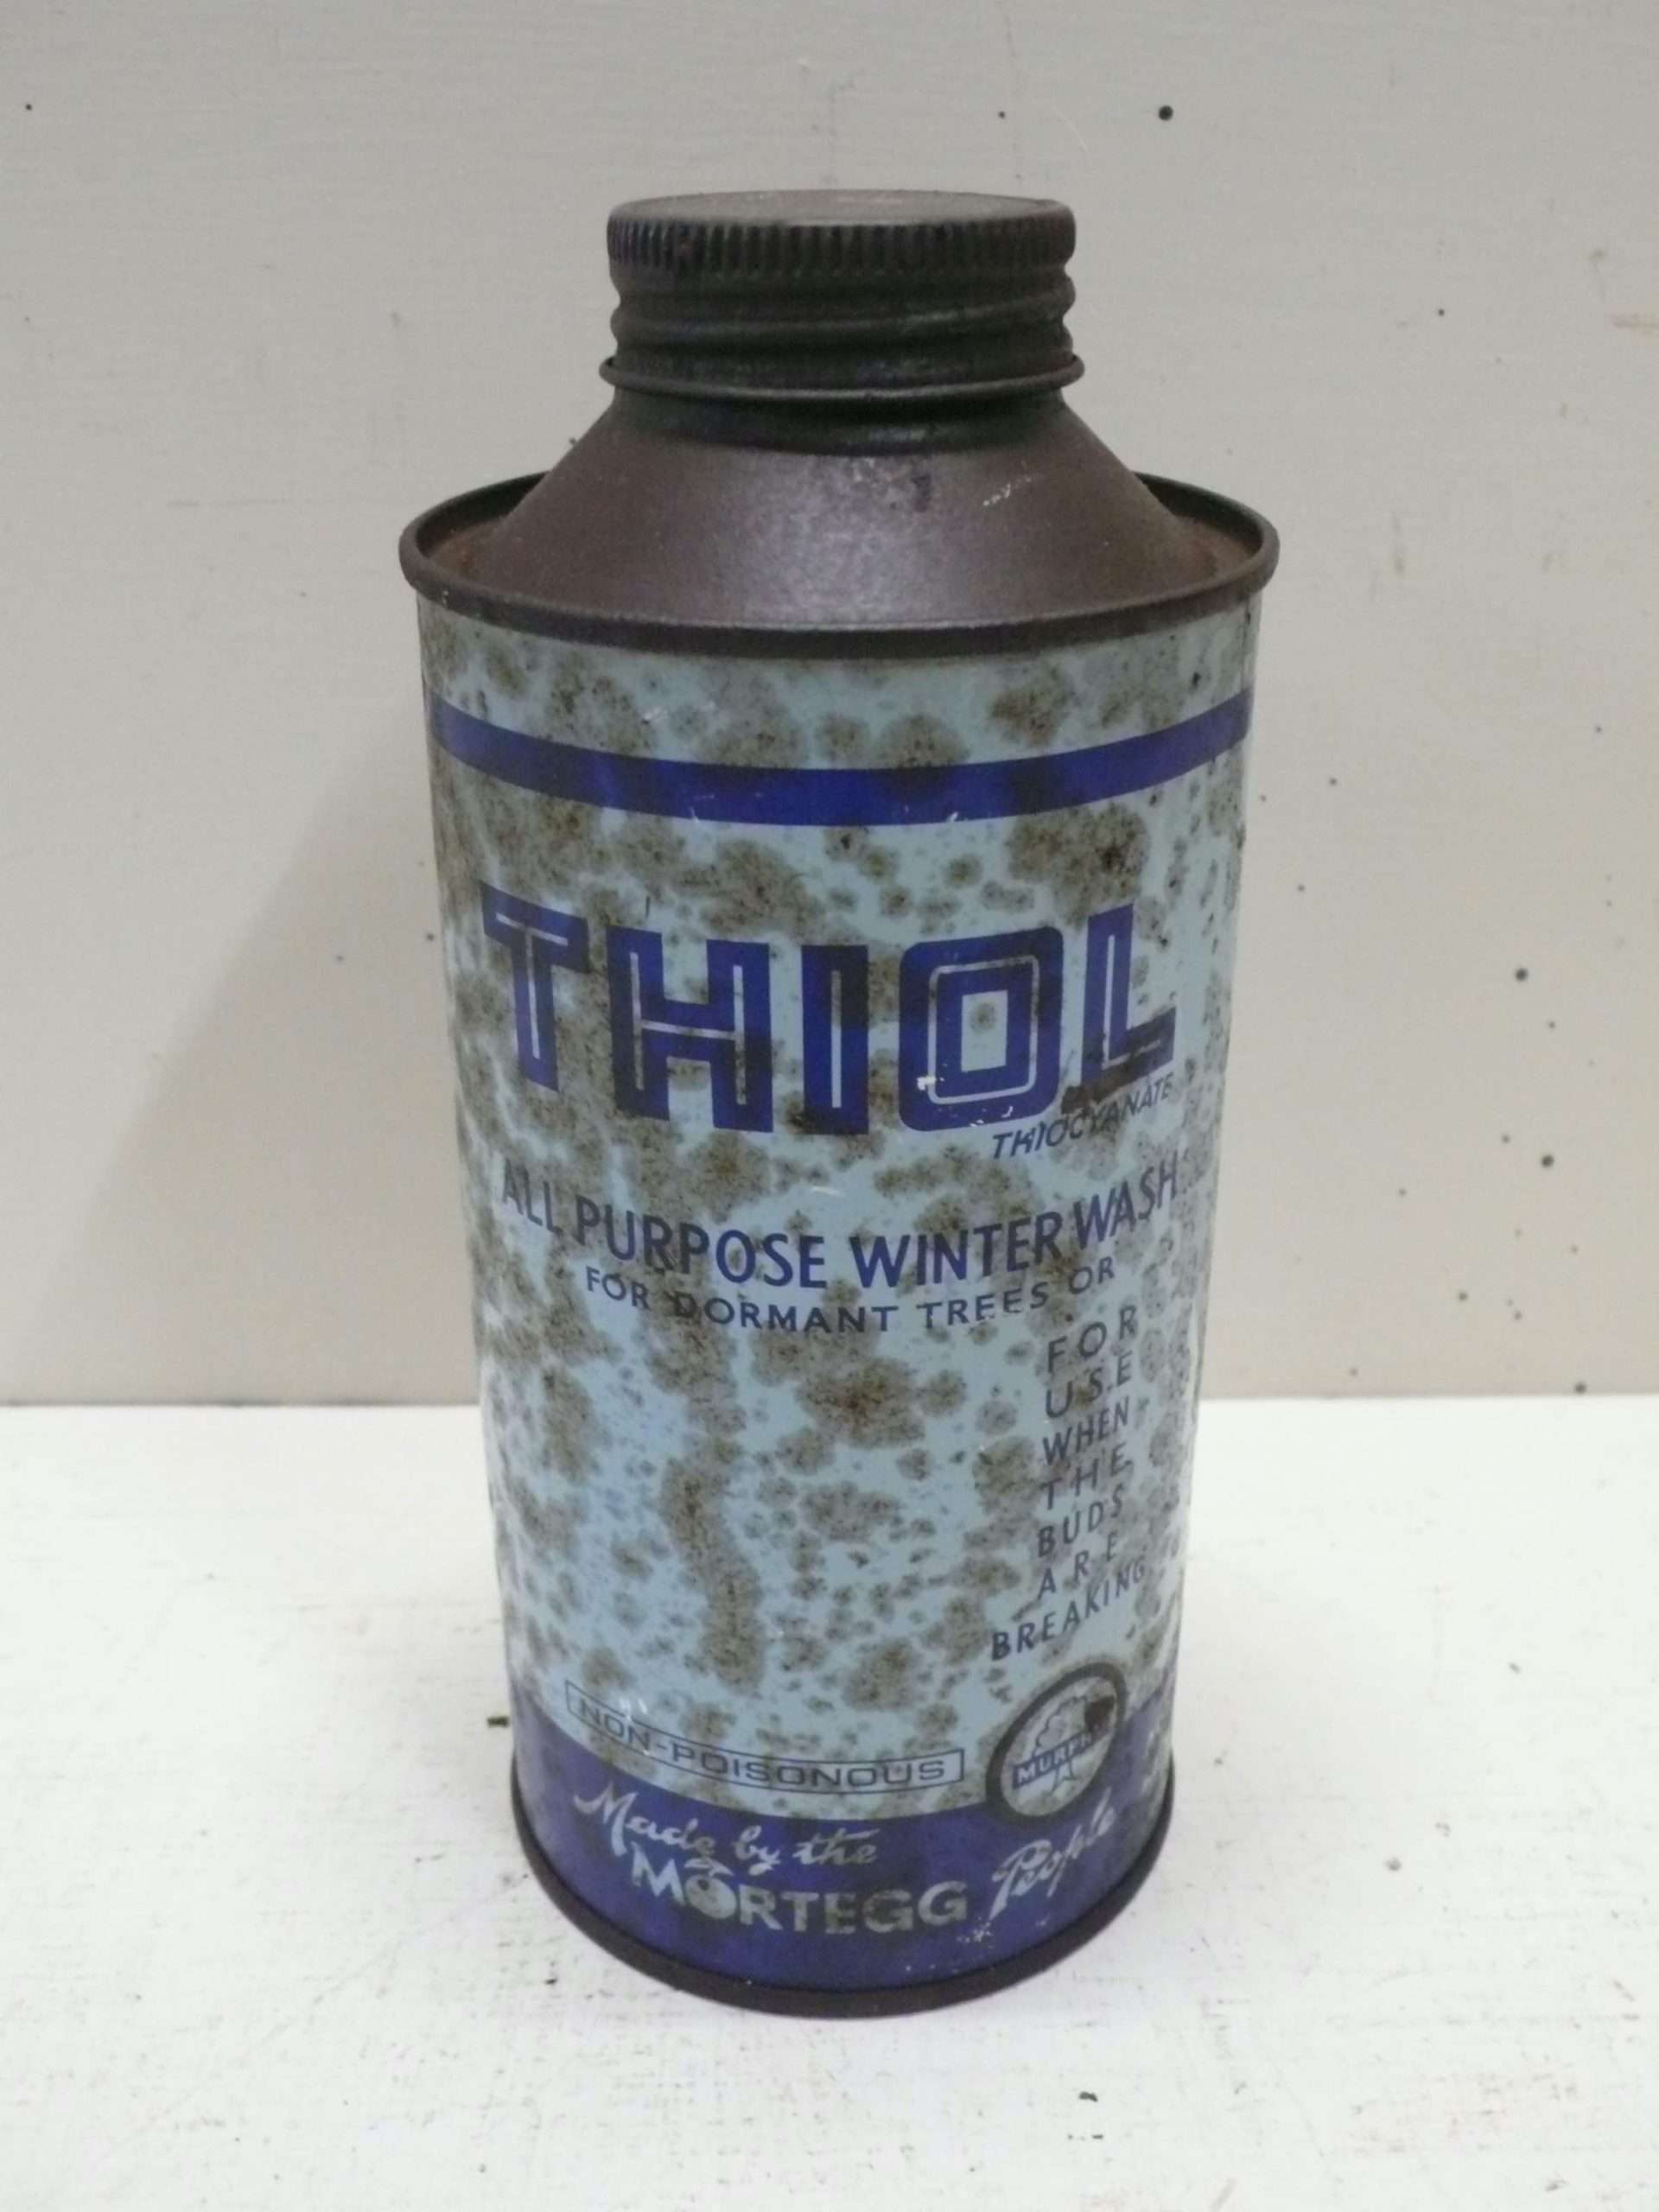 Vintage Tin of Thiol Winter Wash